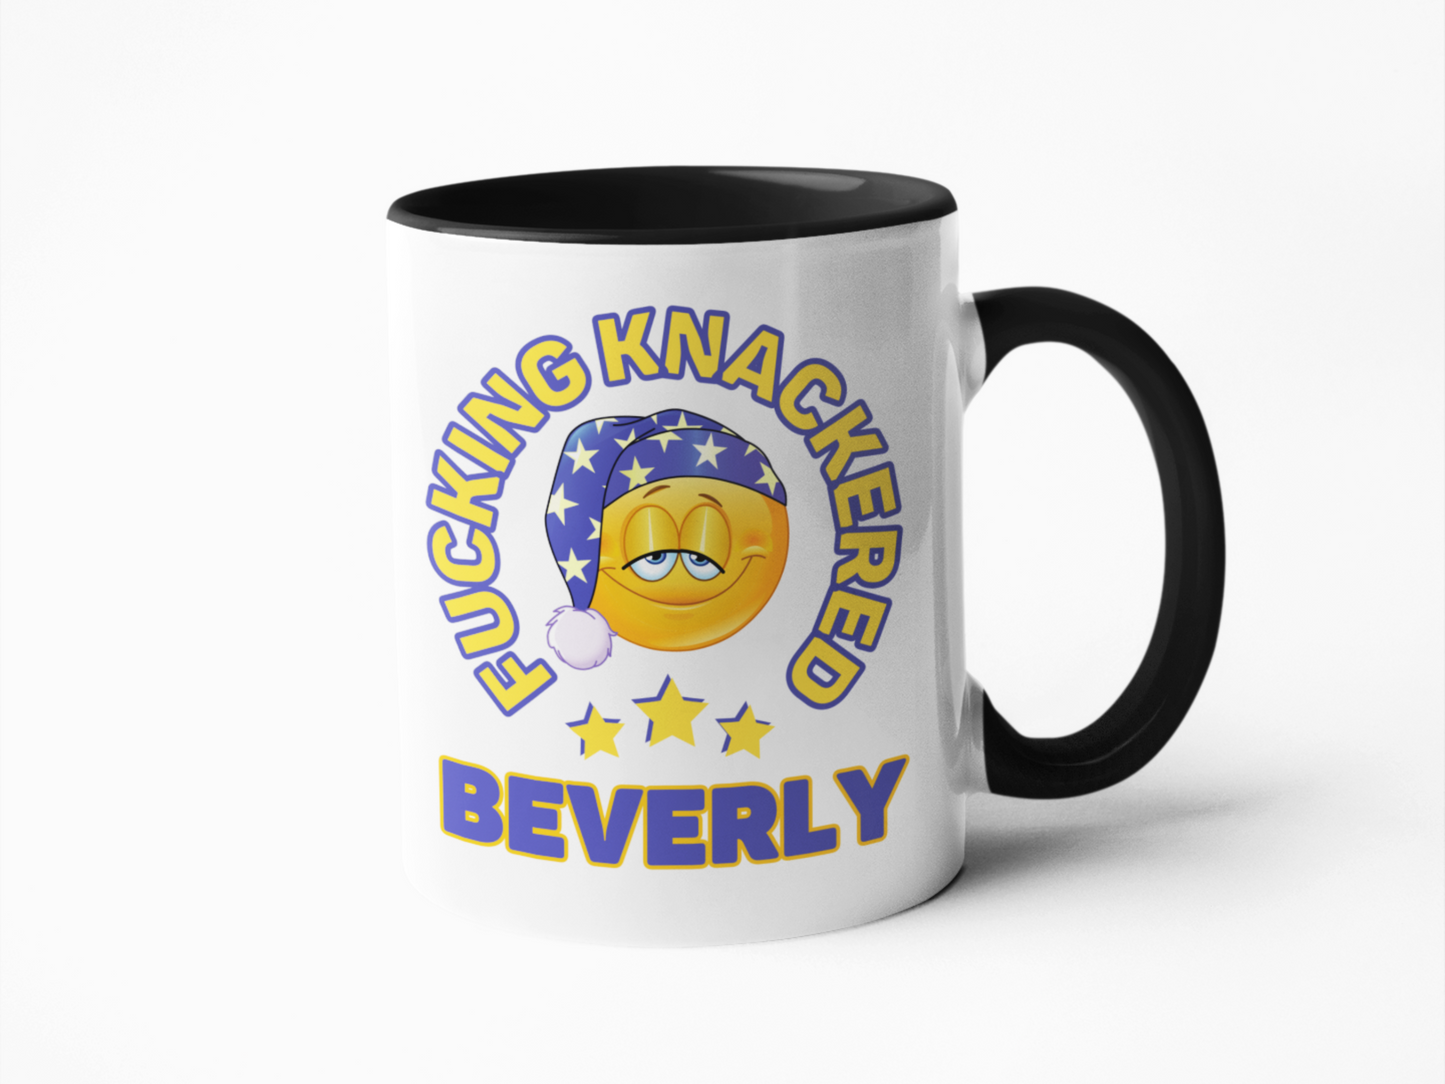 Fucking knackered snoozy moon theme coffee mug